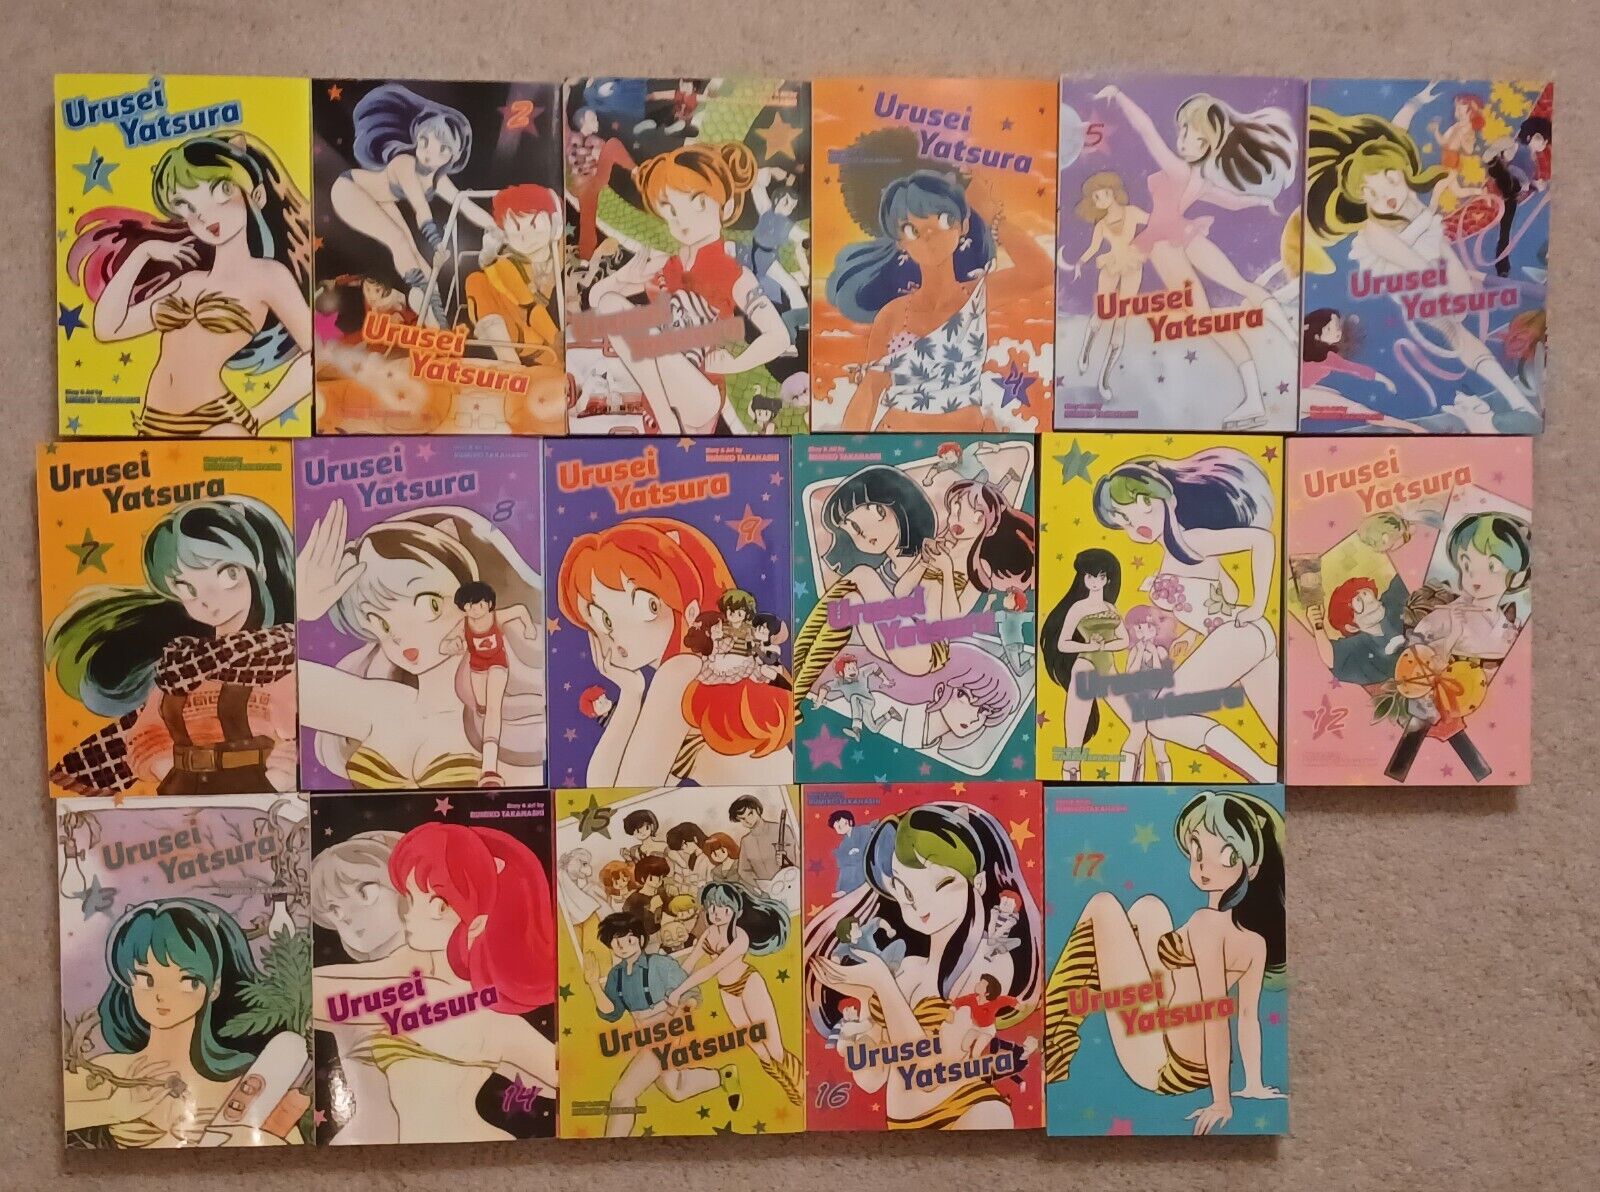 Urusei Yatsura Manga Vol 1-17 Complete Set with Misc. Comics